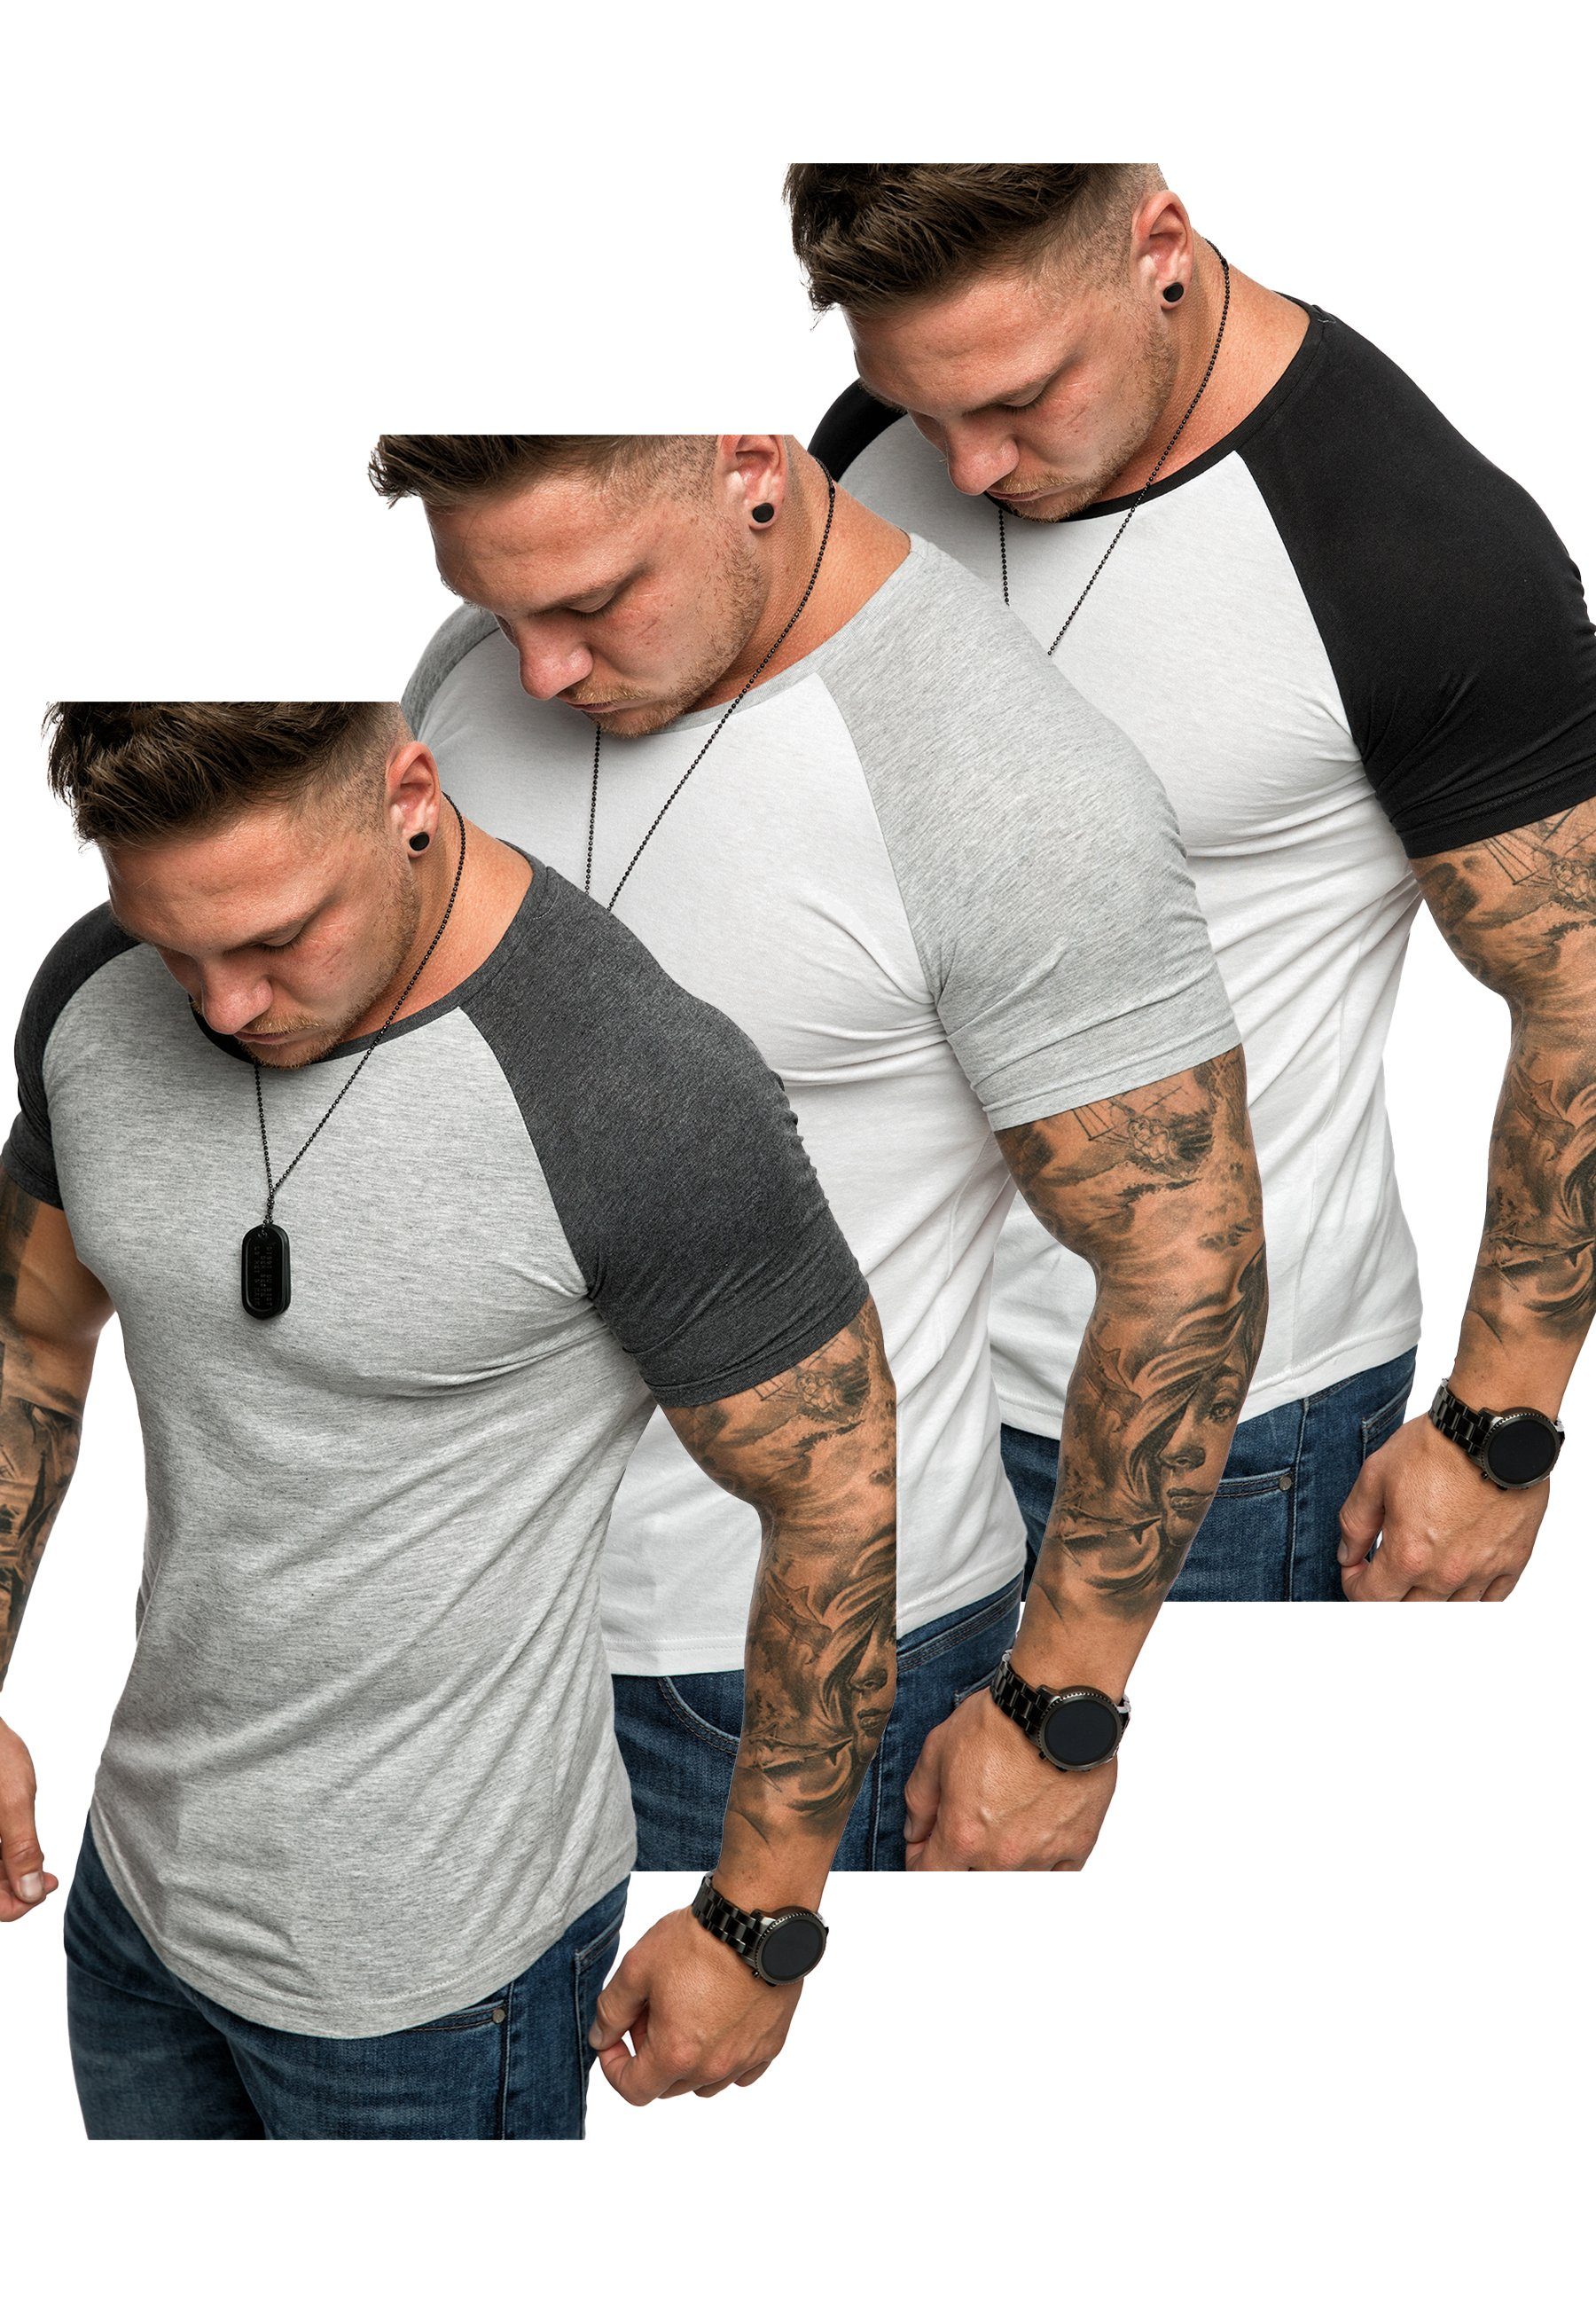 + + 3er-Pack Kontrast Amaci&Sons Grau/Anthrazit) Raglan Basic T-Shirt T-Shirt (3er-Pack) (Weiß/Schwarz T-Shirts 3. Oversize Herren Weiß/Grau OMAHA